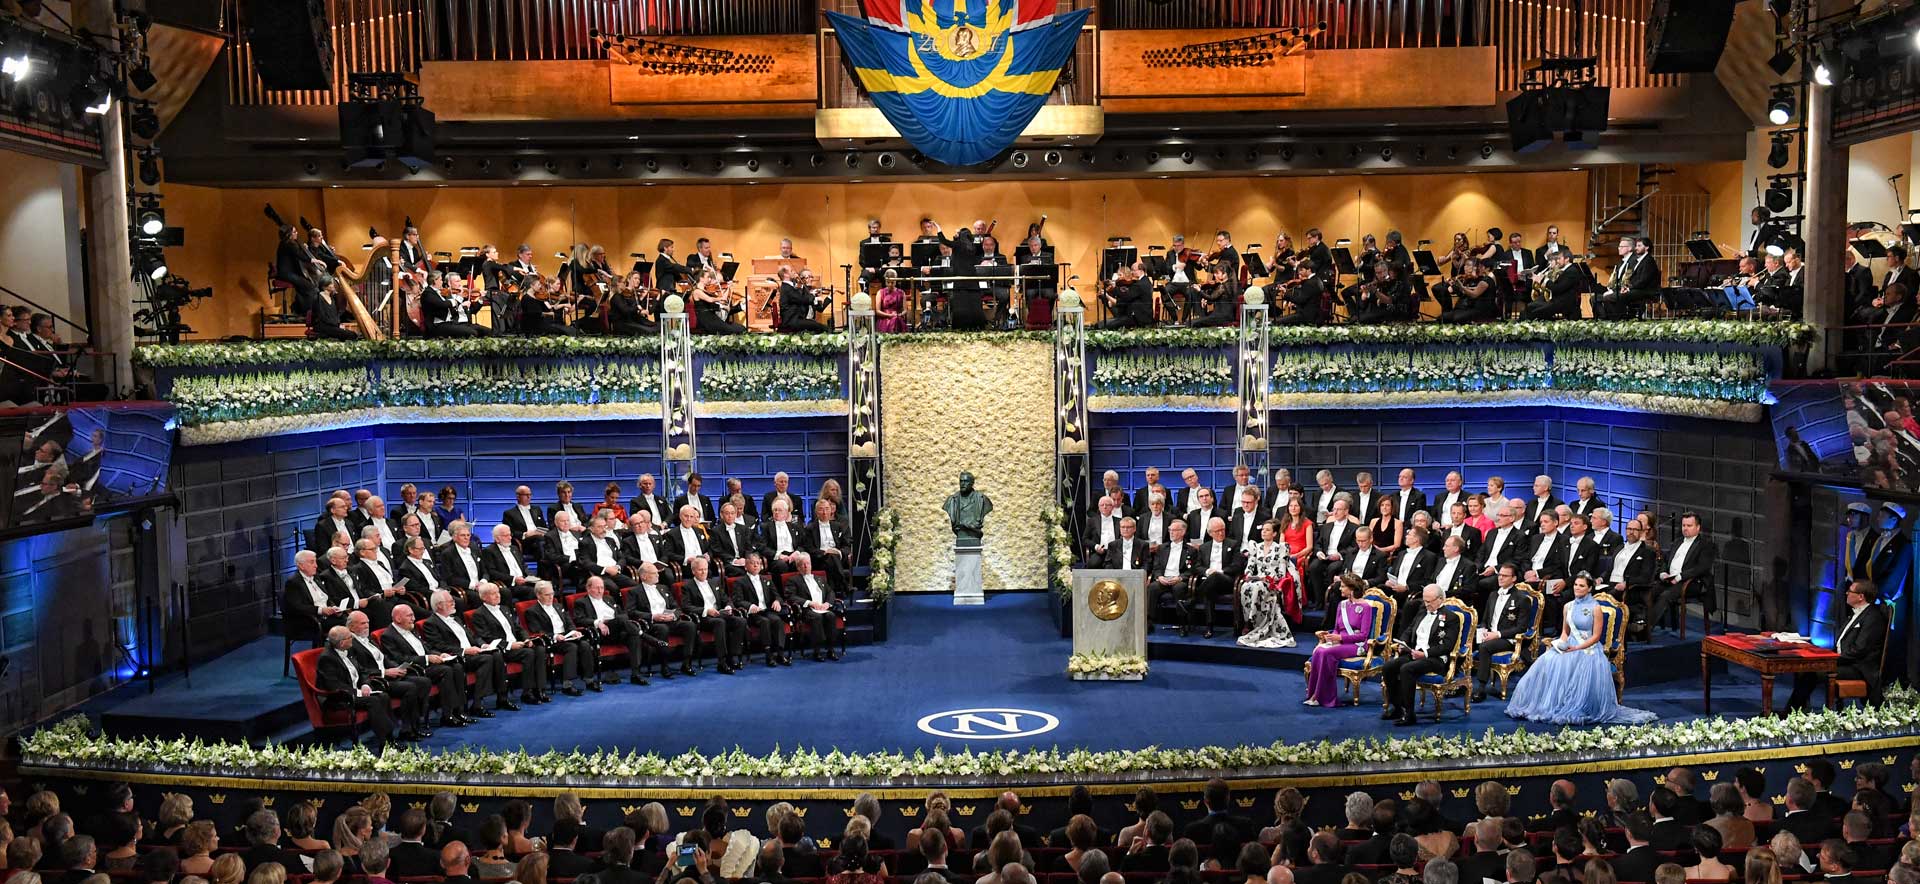 The 2017 Nobel Prize ceremony stage 